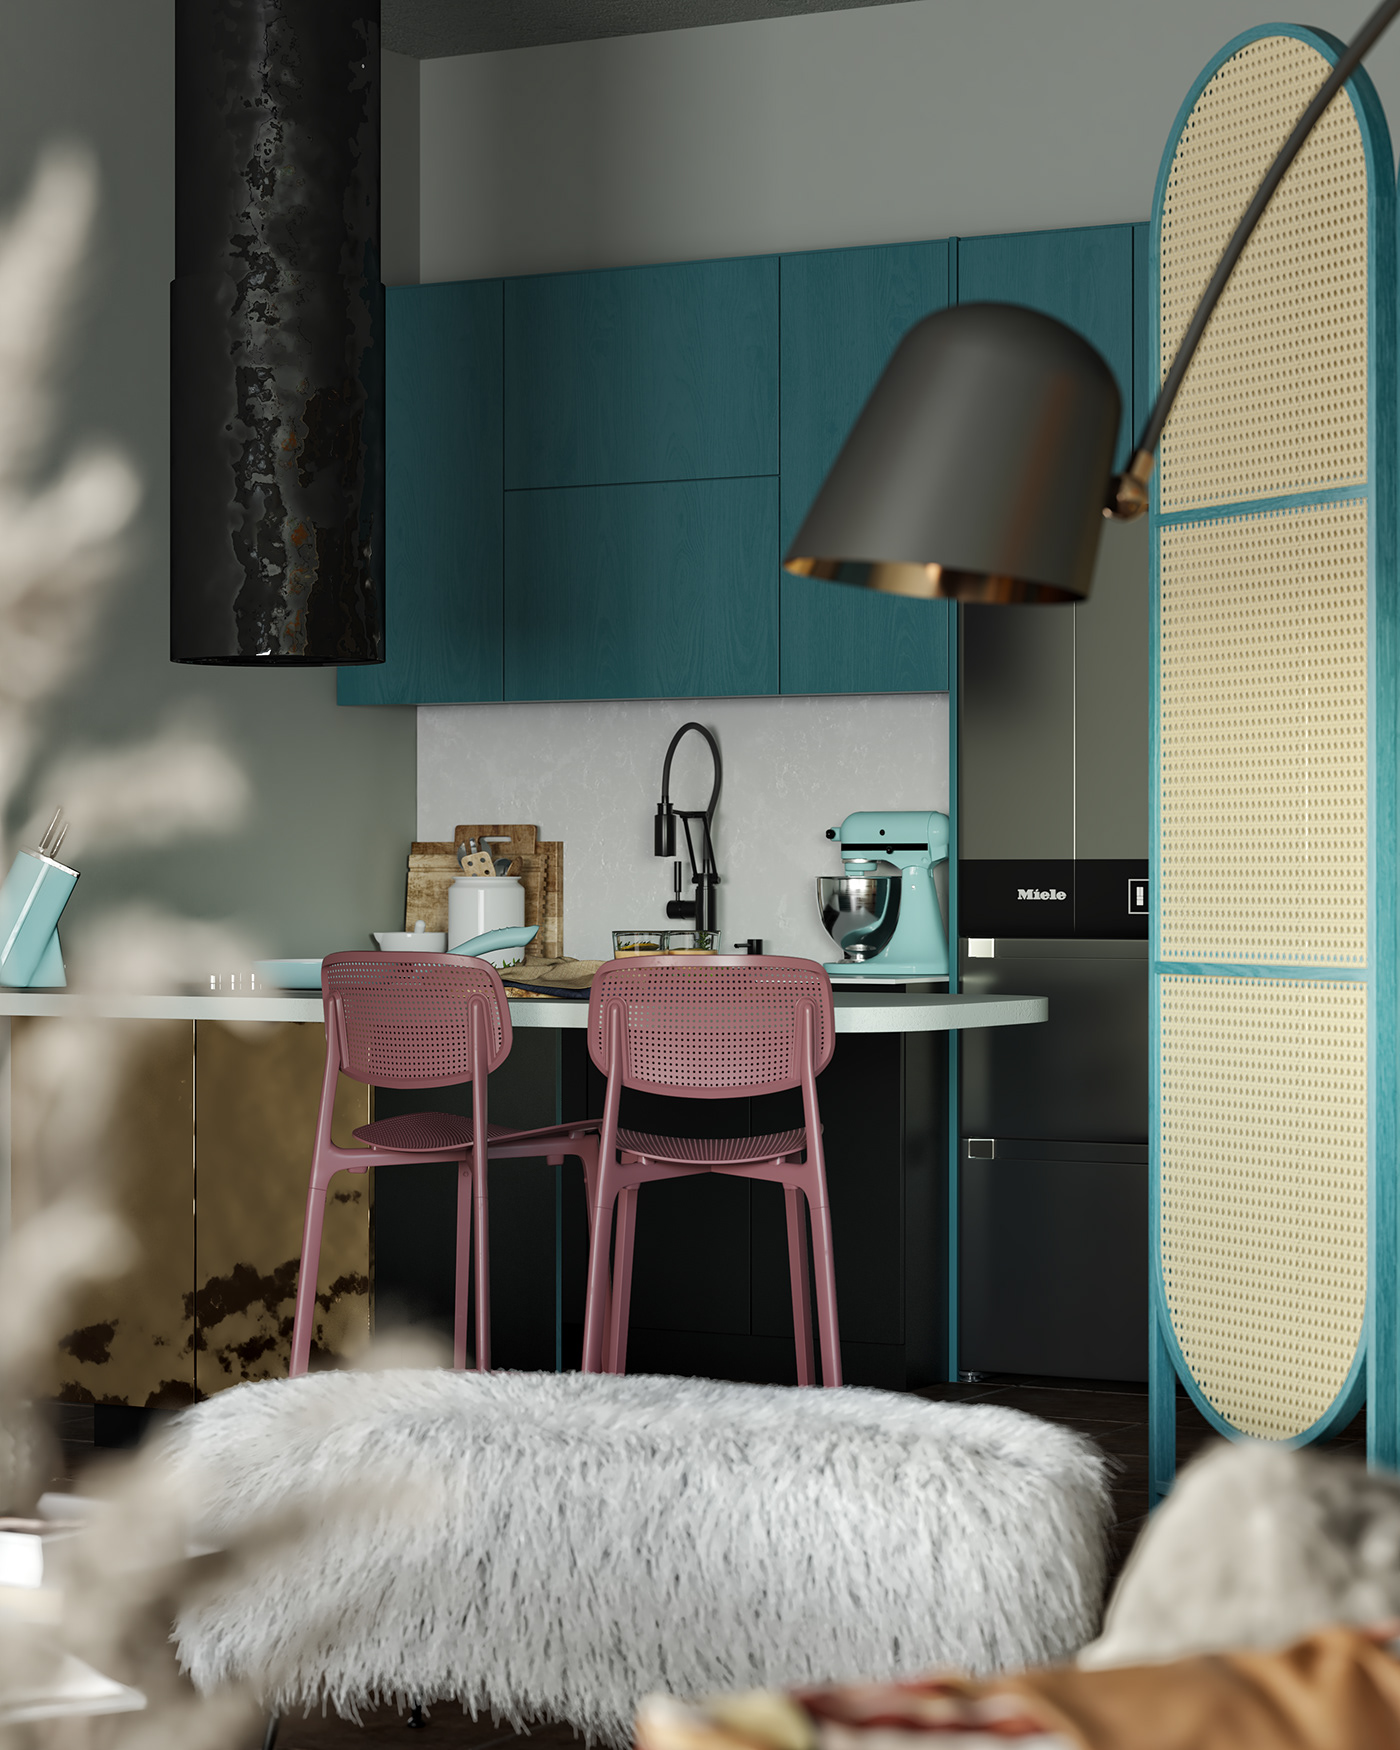 3dart architecture Interior kitchen livingroom visualization